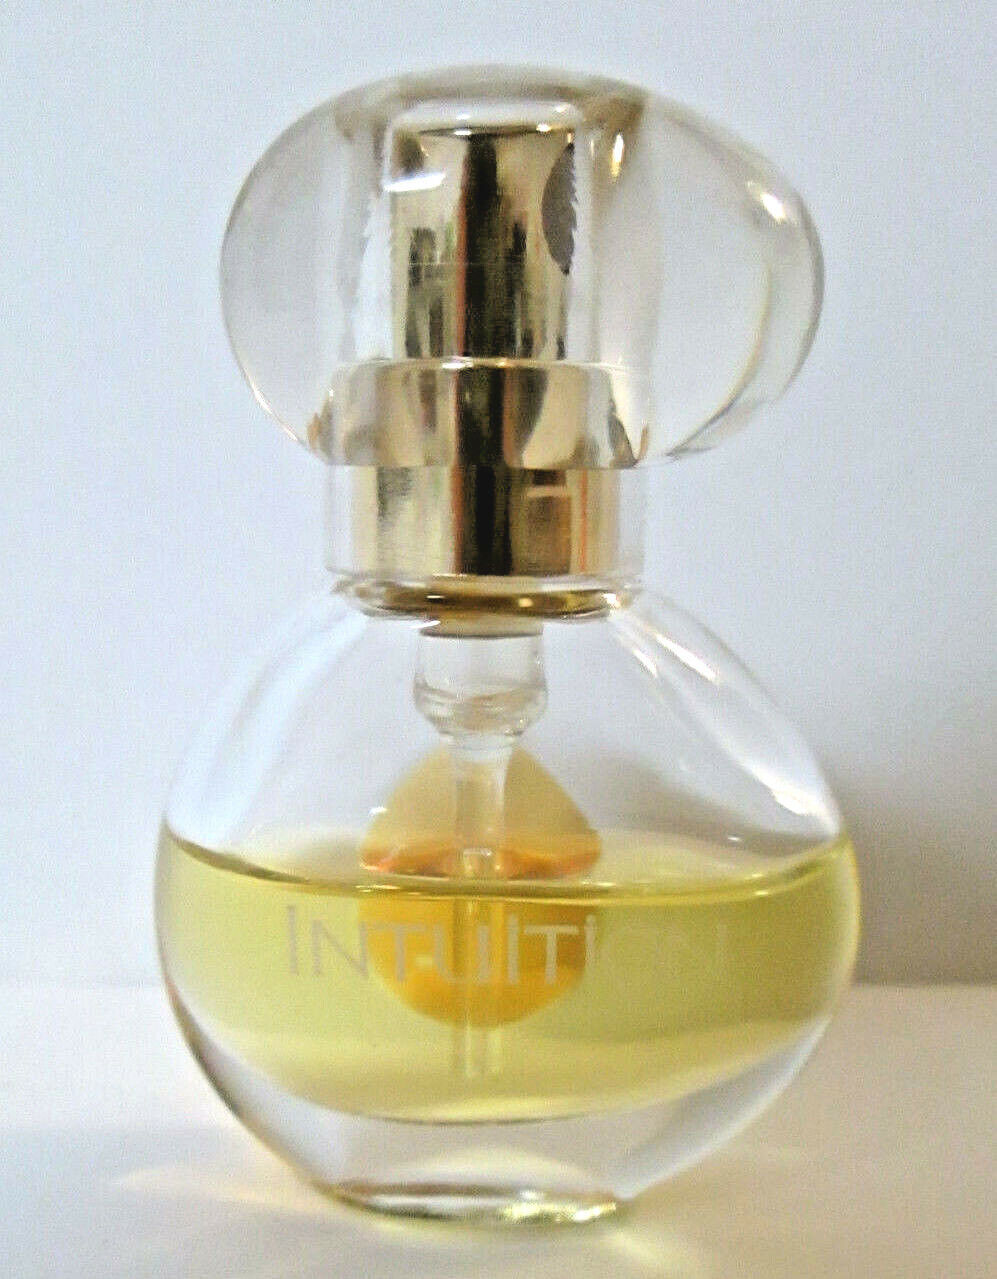 Estee Lauder Intuition MINI Perfume .14 Oz Eau de Parfum EDP Spray 4ML Miniature - $9.00